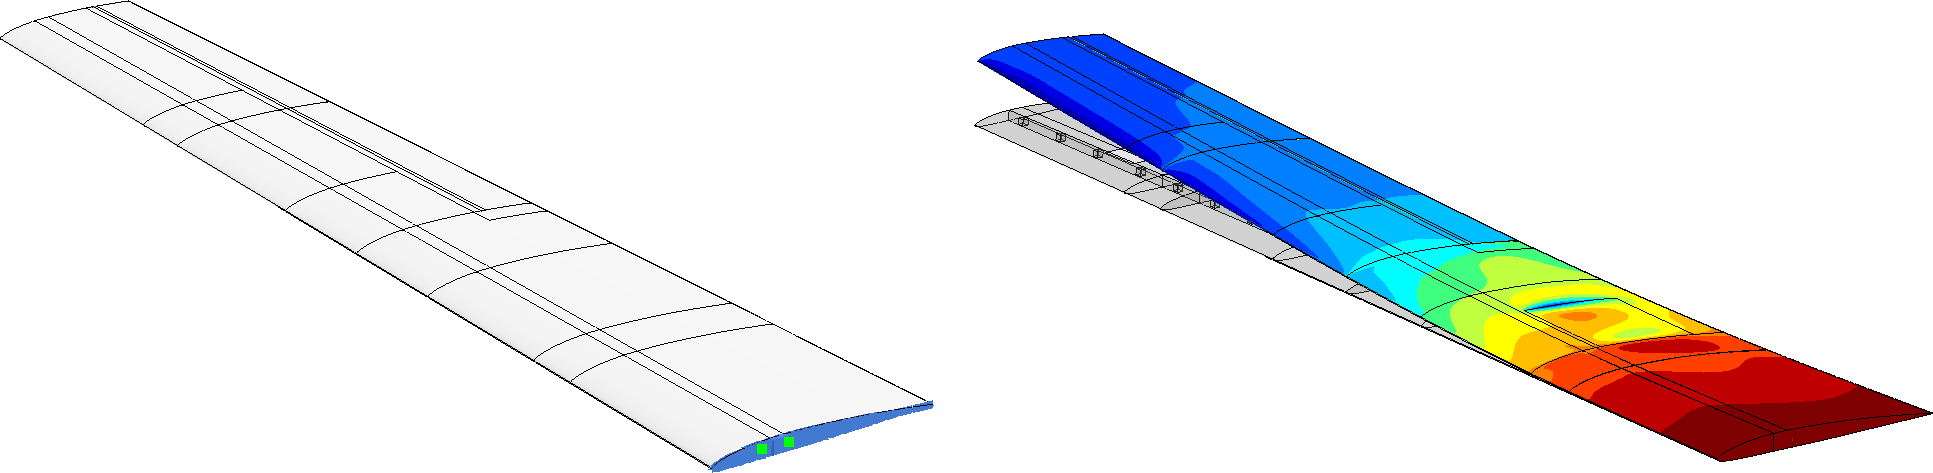 Simulation models rapidly predict wing deformation under aerodynamic loads